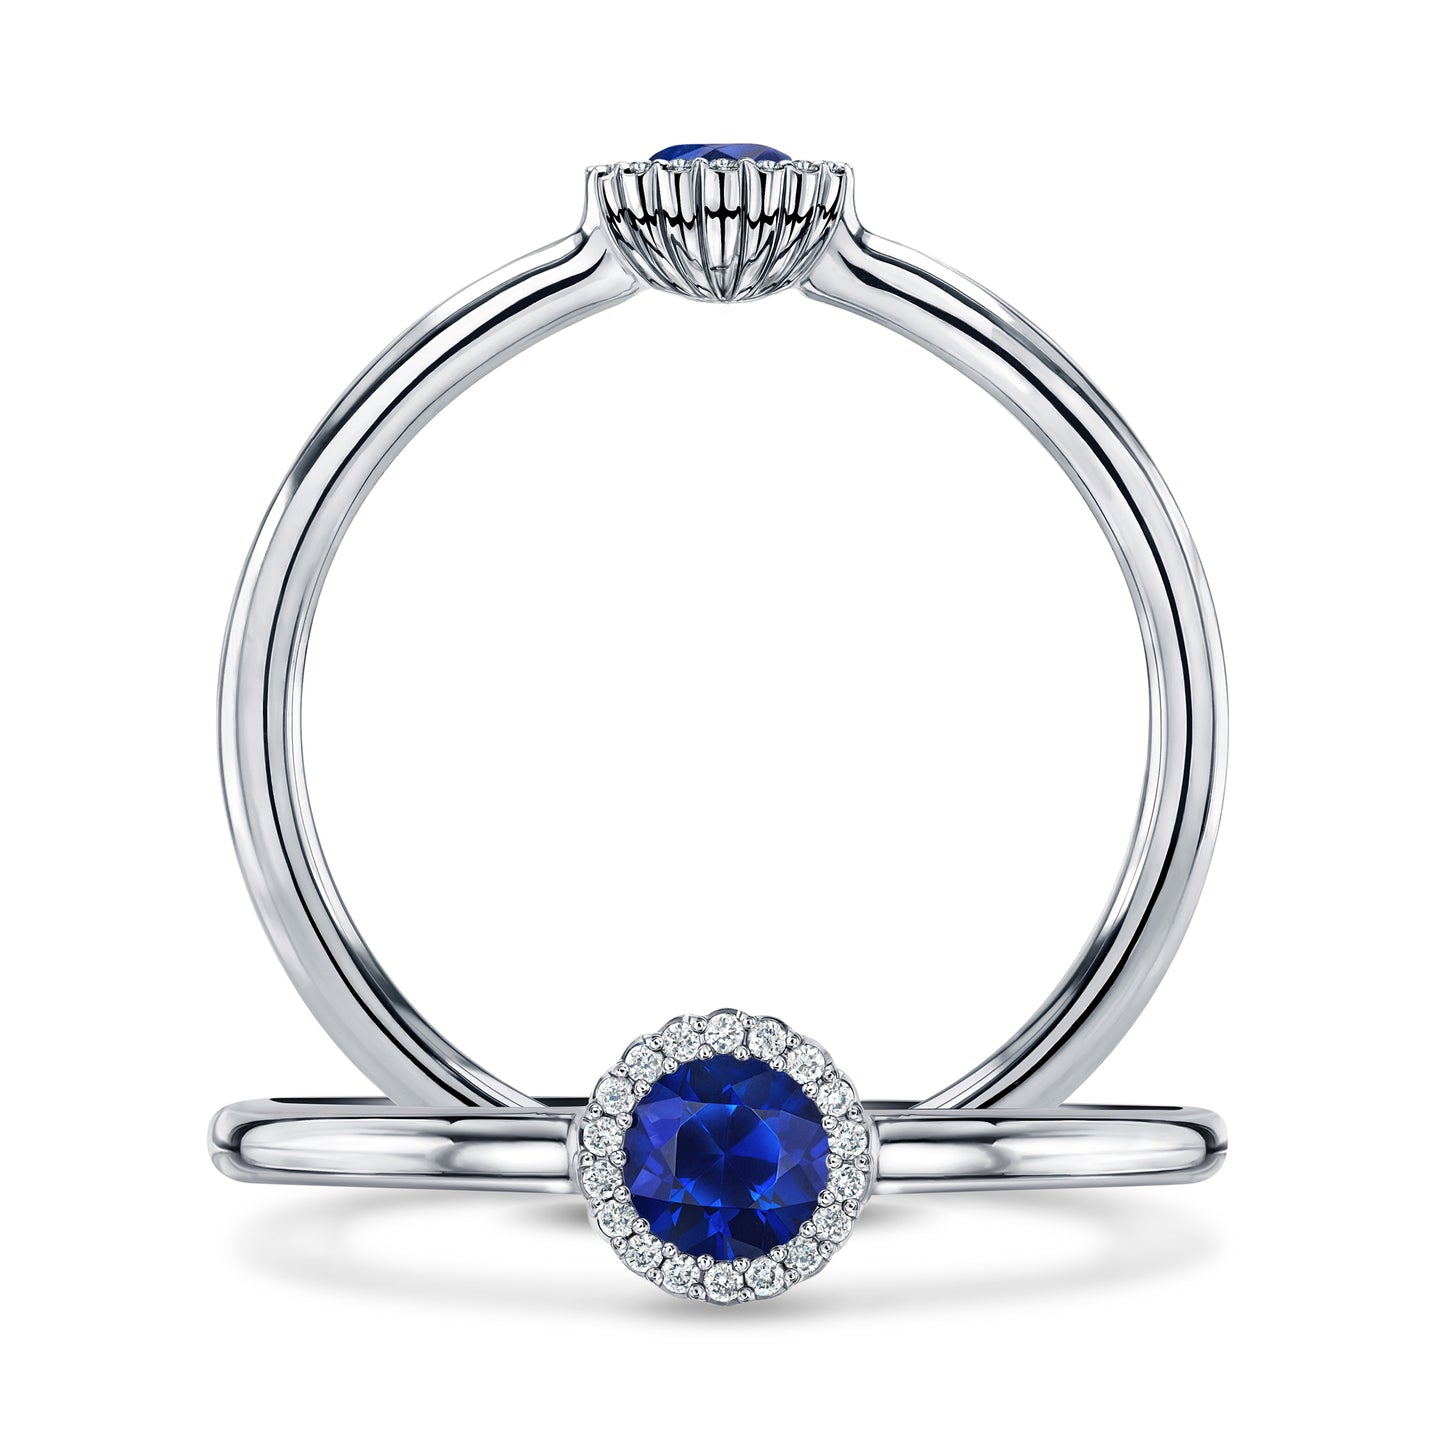 Cannele Petit Sapphire Ring